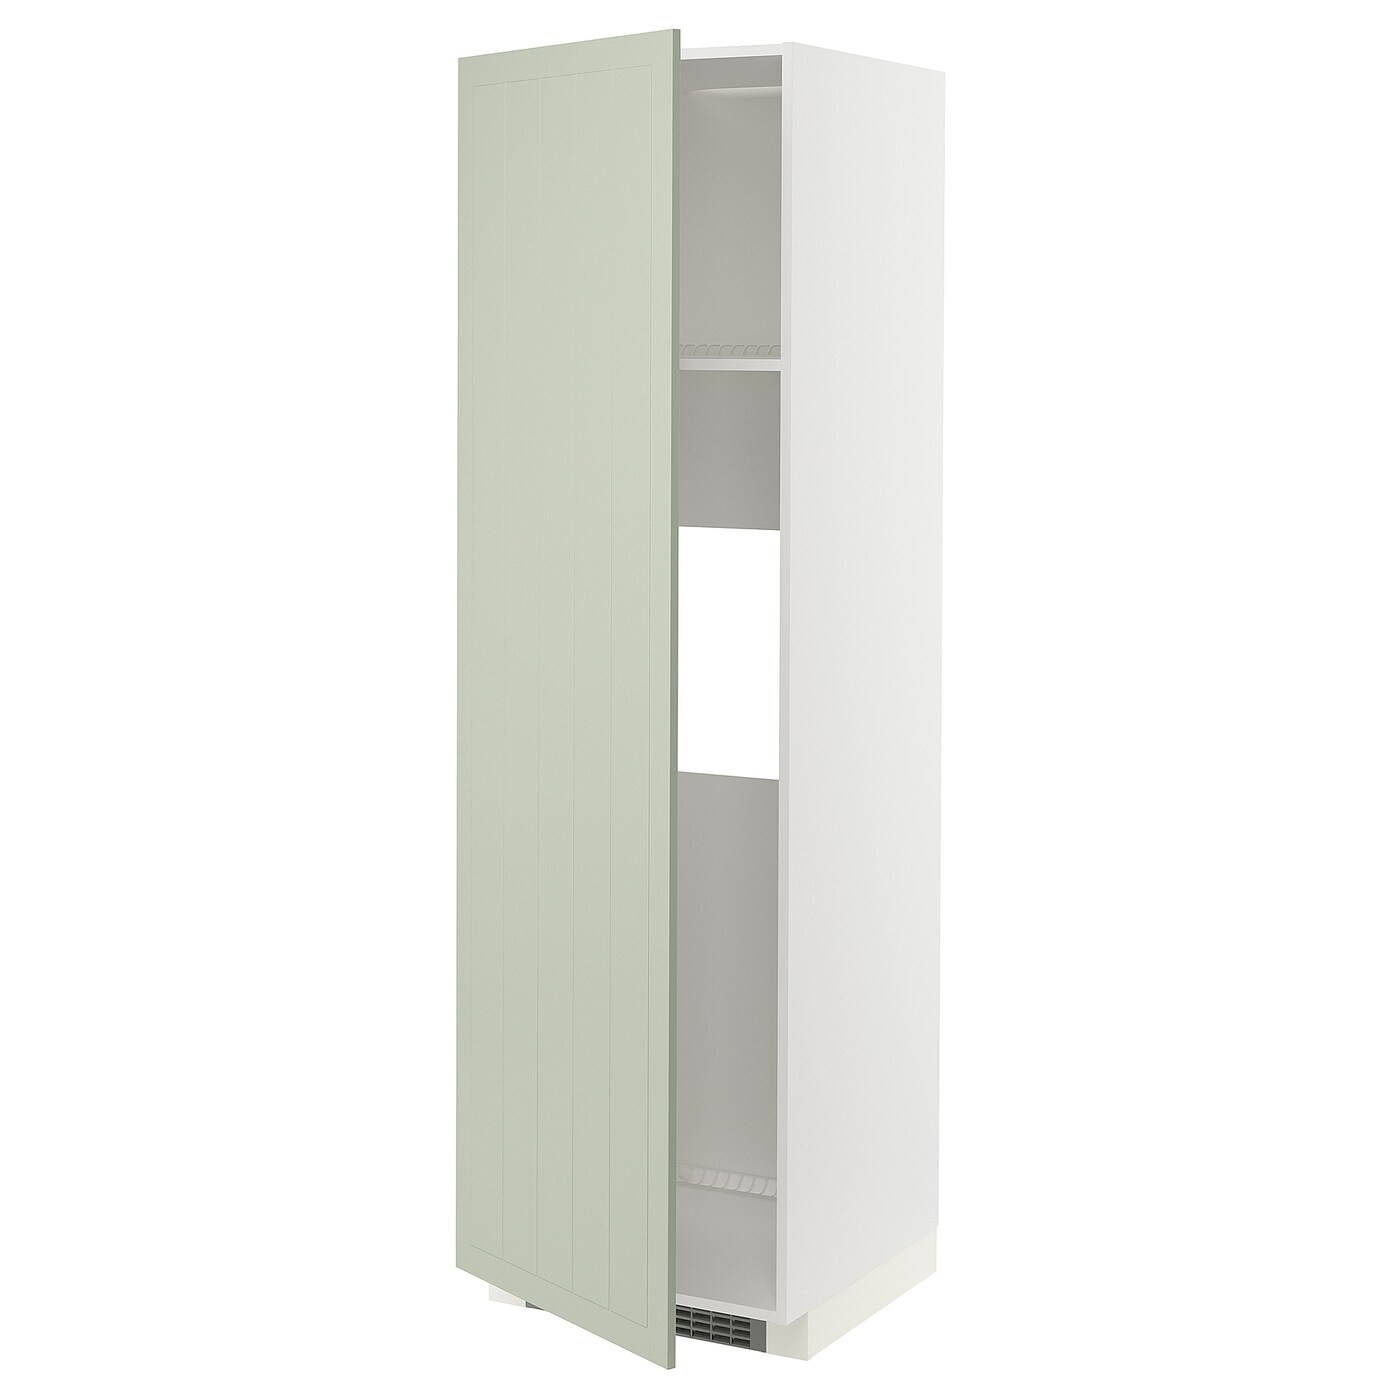 Высокий кухонный шкаф - IKEA METOD/МЕТОД ИКЕА, 200х60х60 см, белый/зеленый